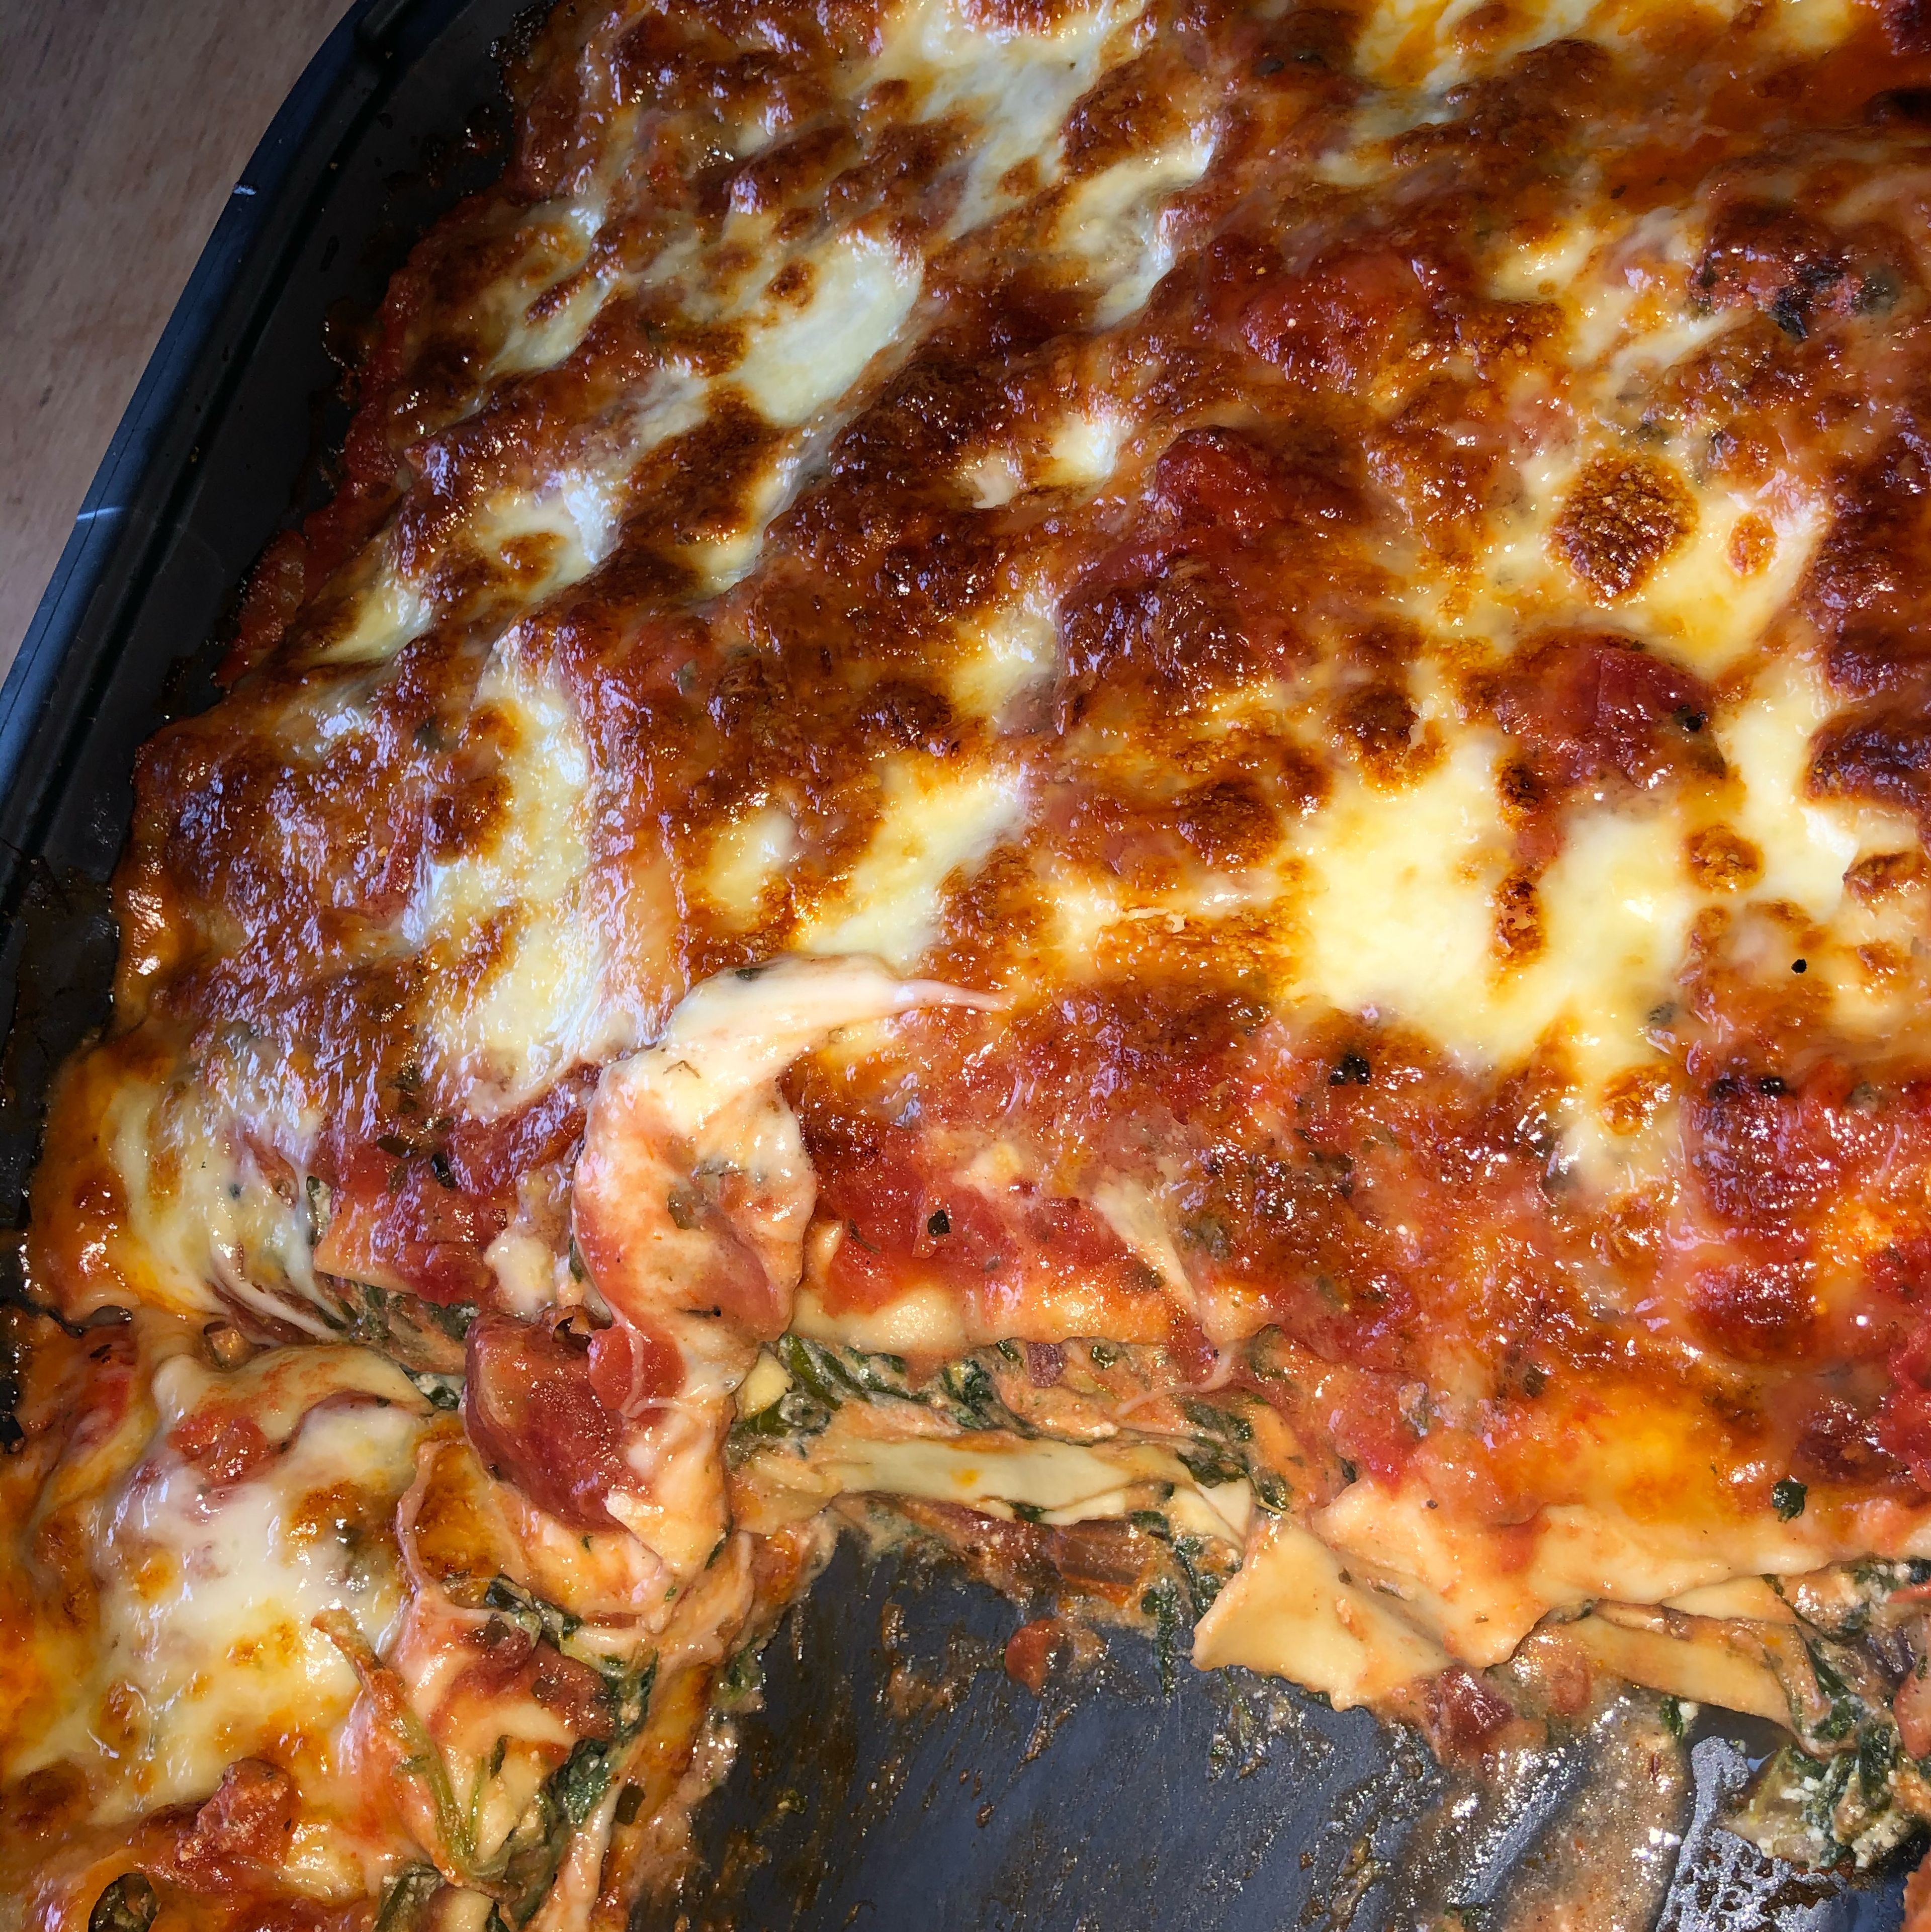 Vegetarian lasagna with spinach, mushrooms, and ricotta